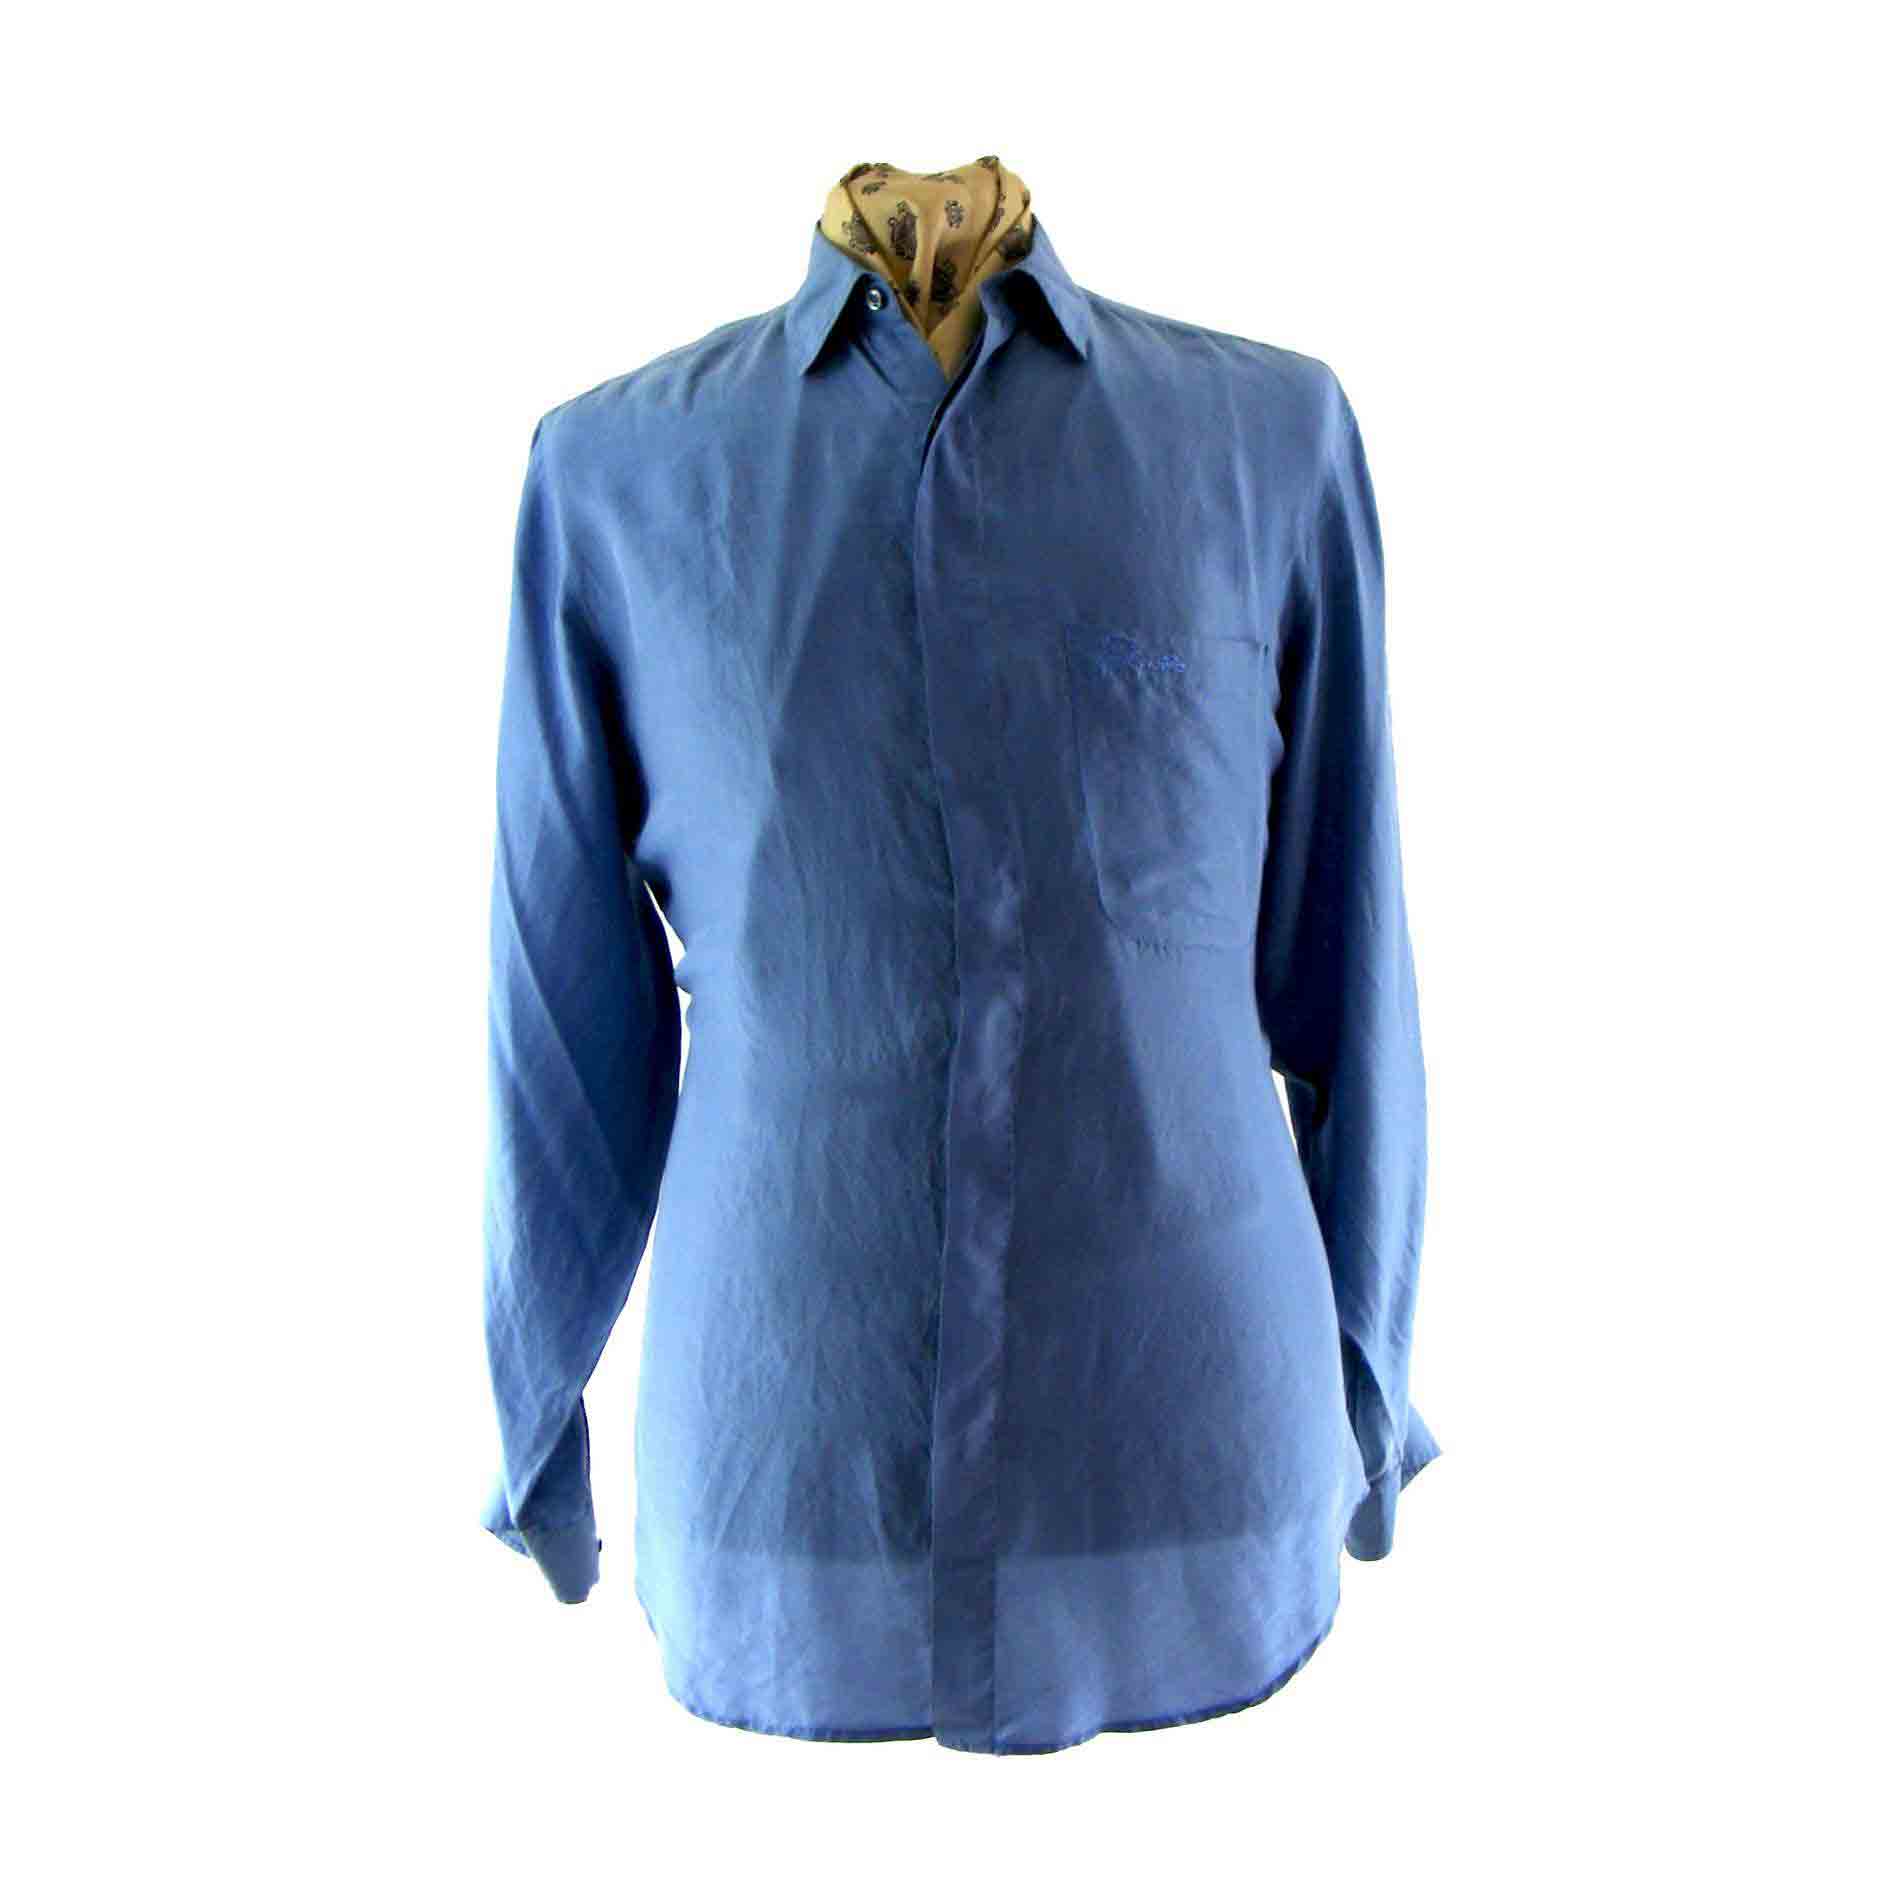 Vintage 90s silk shirt - Blue 17 Vintage Clothing